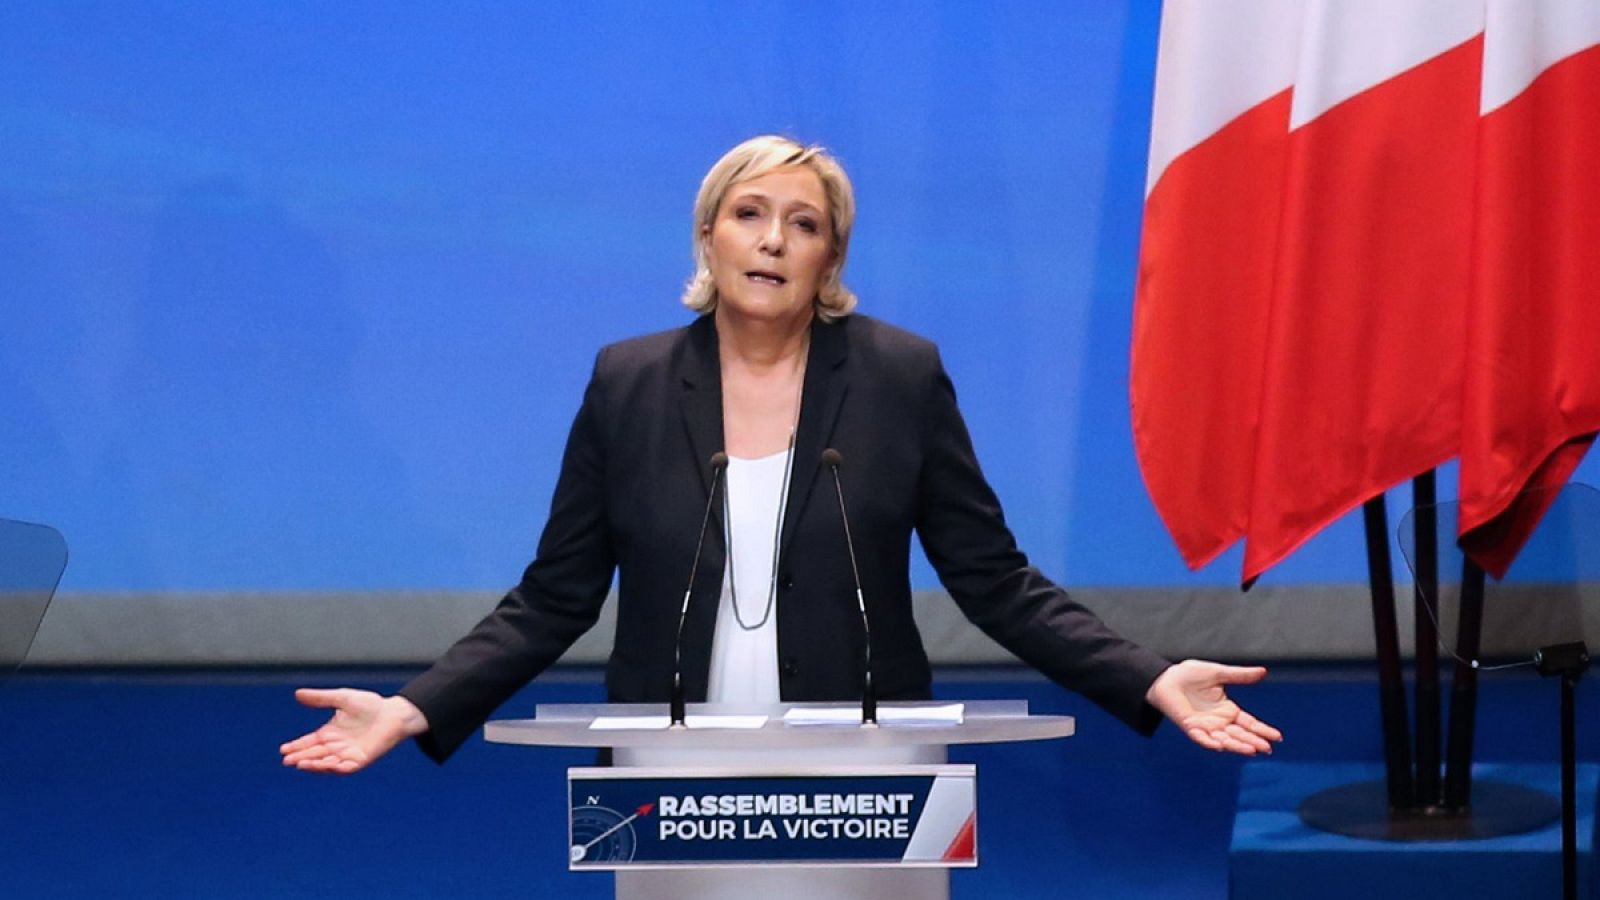 La presidenta del Frente Nacional, Marine Le Pen